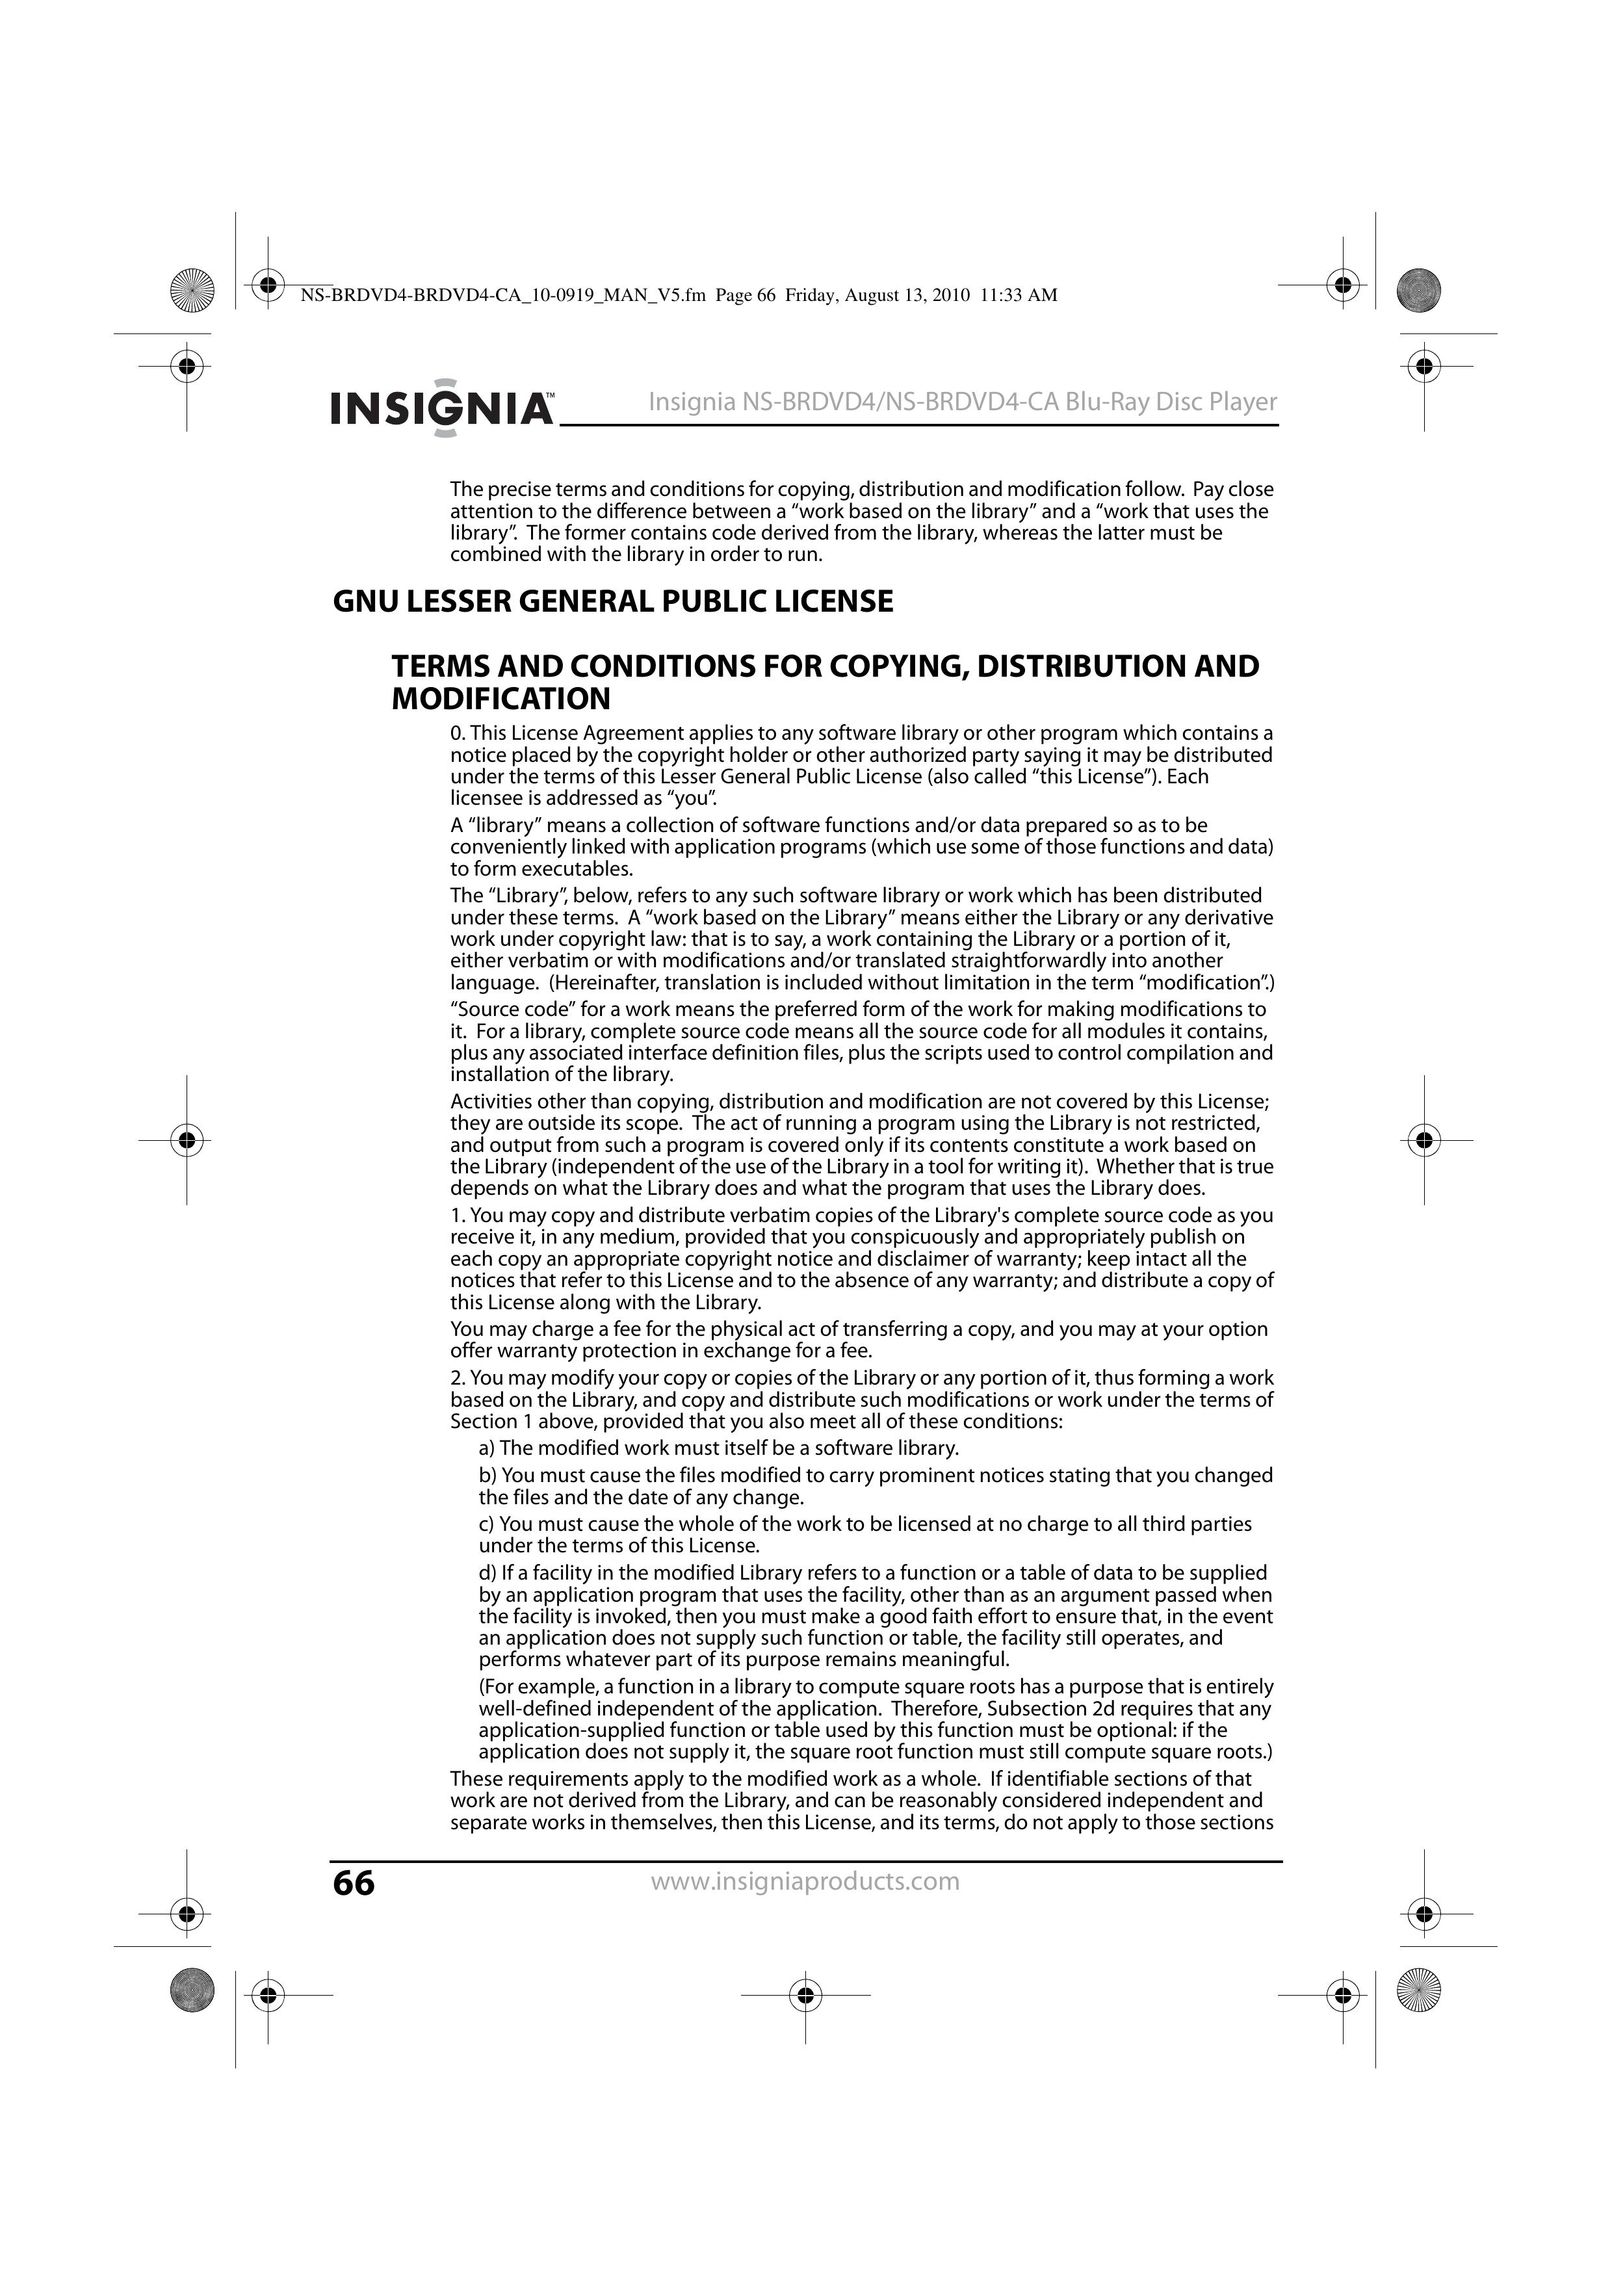 Insignia NS-BRDVD4 Blu-ray Player User Manual (Page 66)